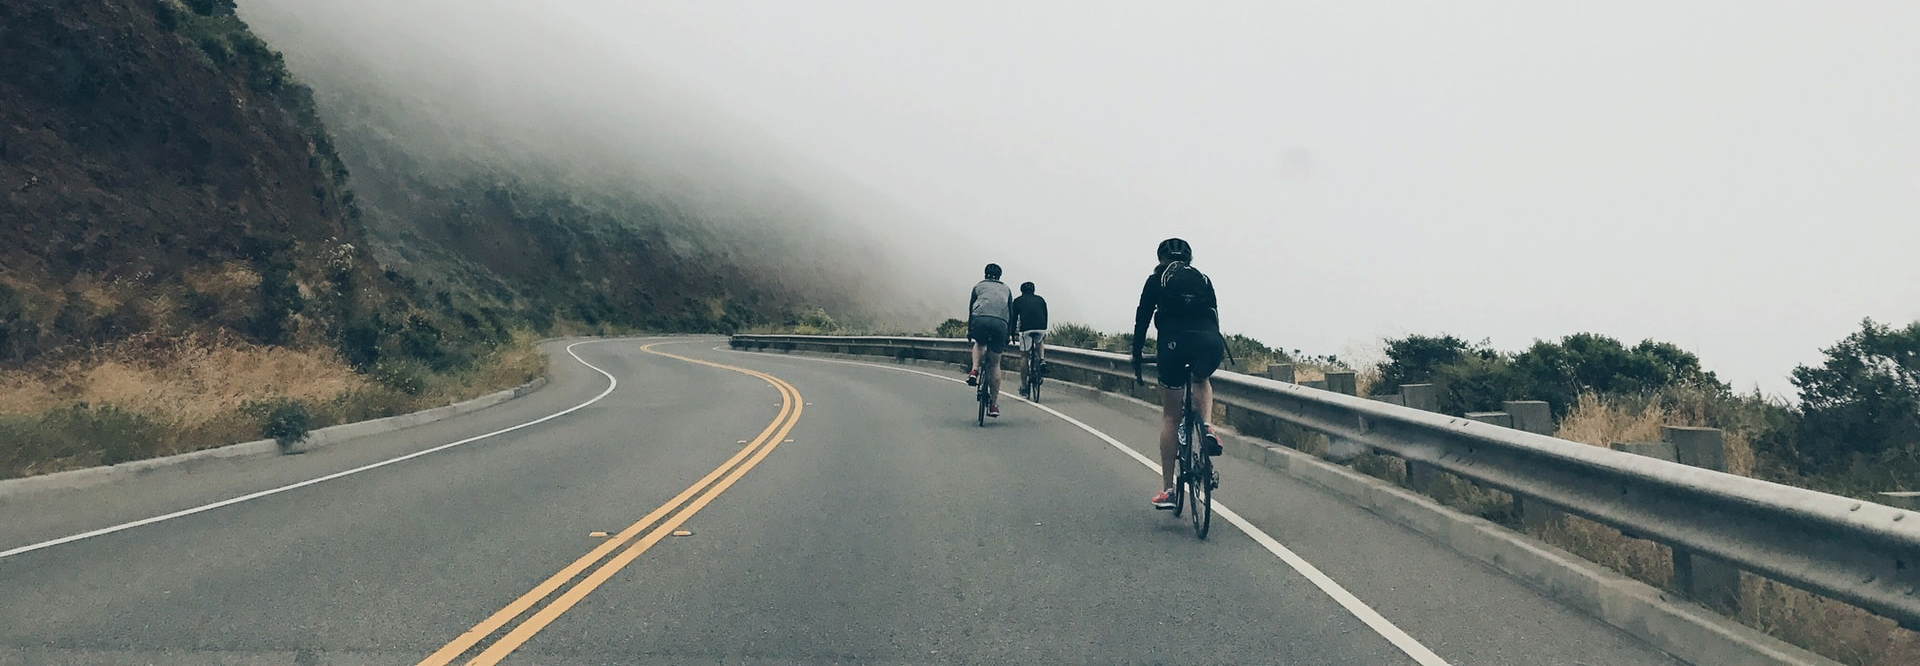 5 Best Road Bike Rides In San Francisco